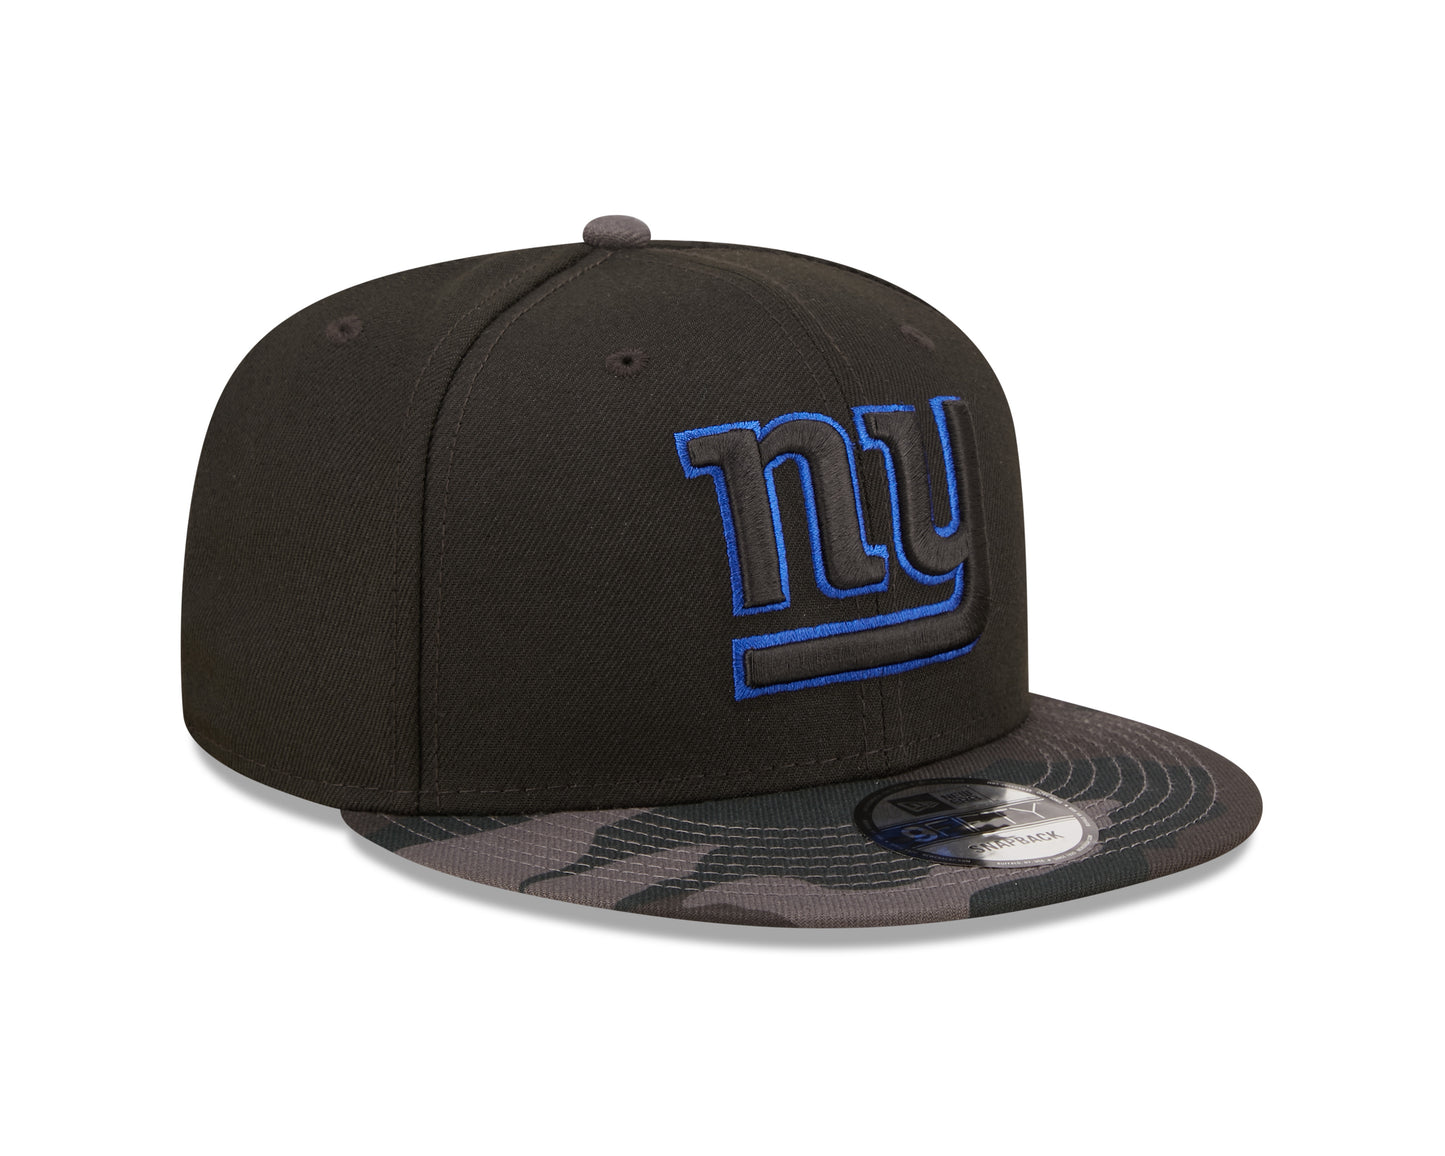 New York Giants NFL New Era Camo Vize 9FIFTY Snapback Hat - Black